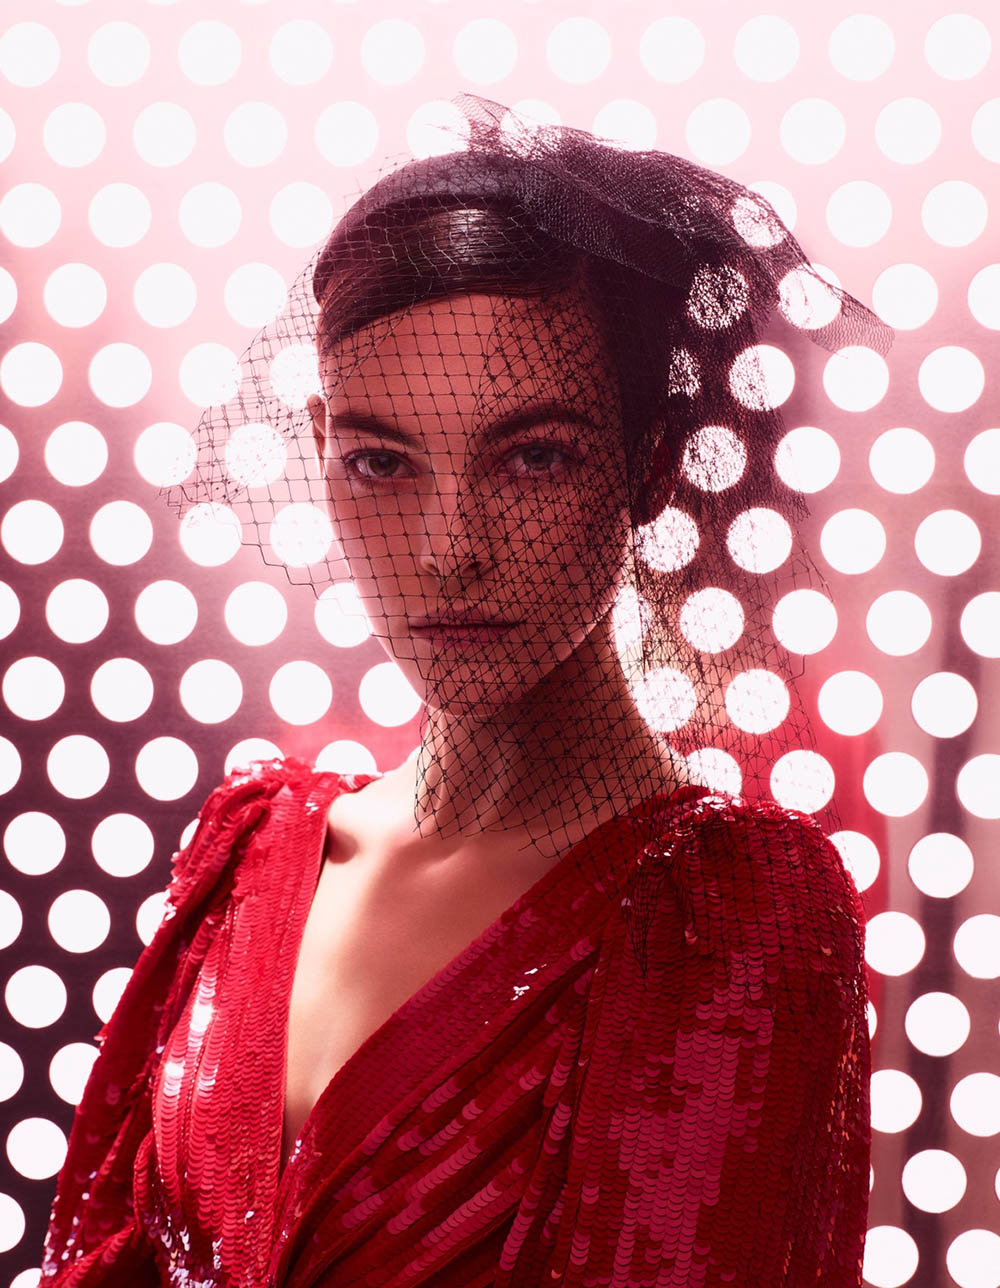 Vittoria Ceretti covers Vogue China March 2019 by Sølve Sundsbø